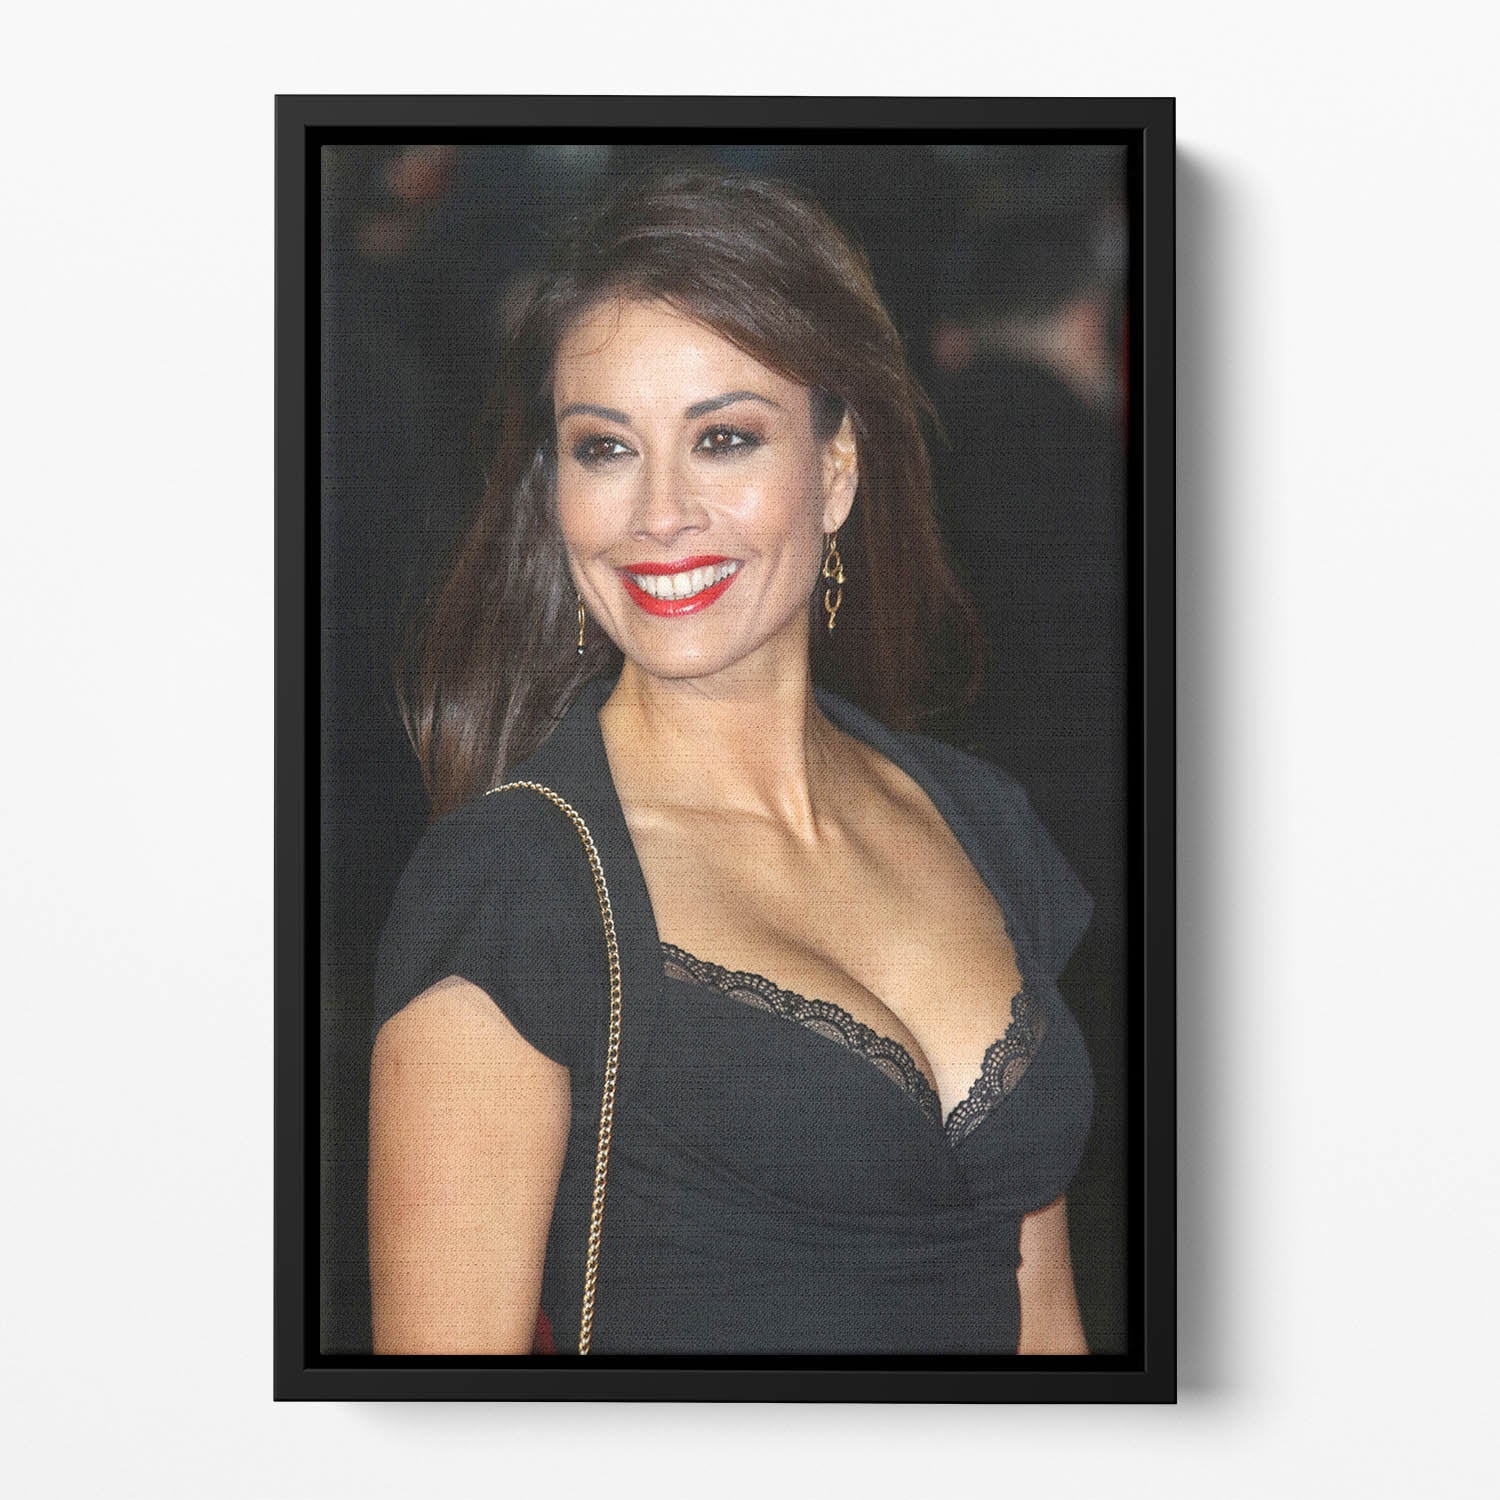 Melanie Sykes in a black dress Floating Framed Canvas